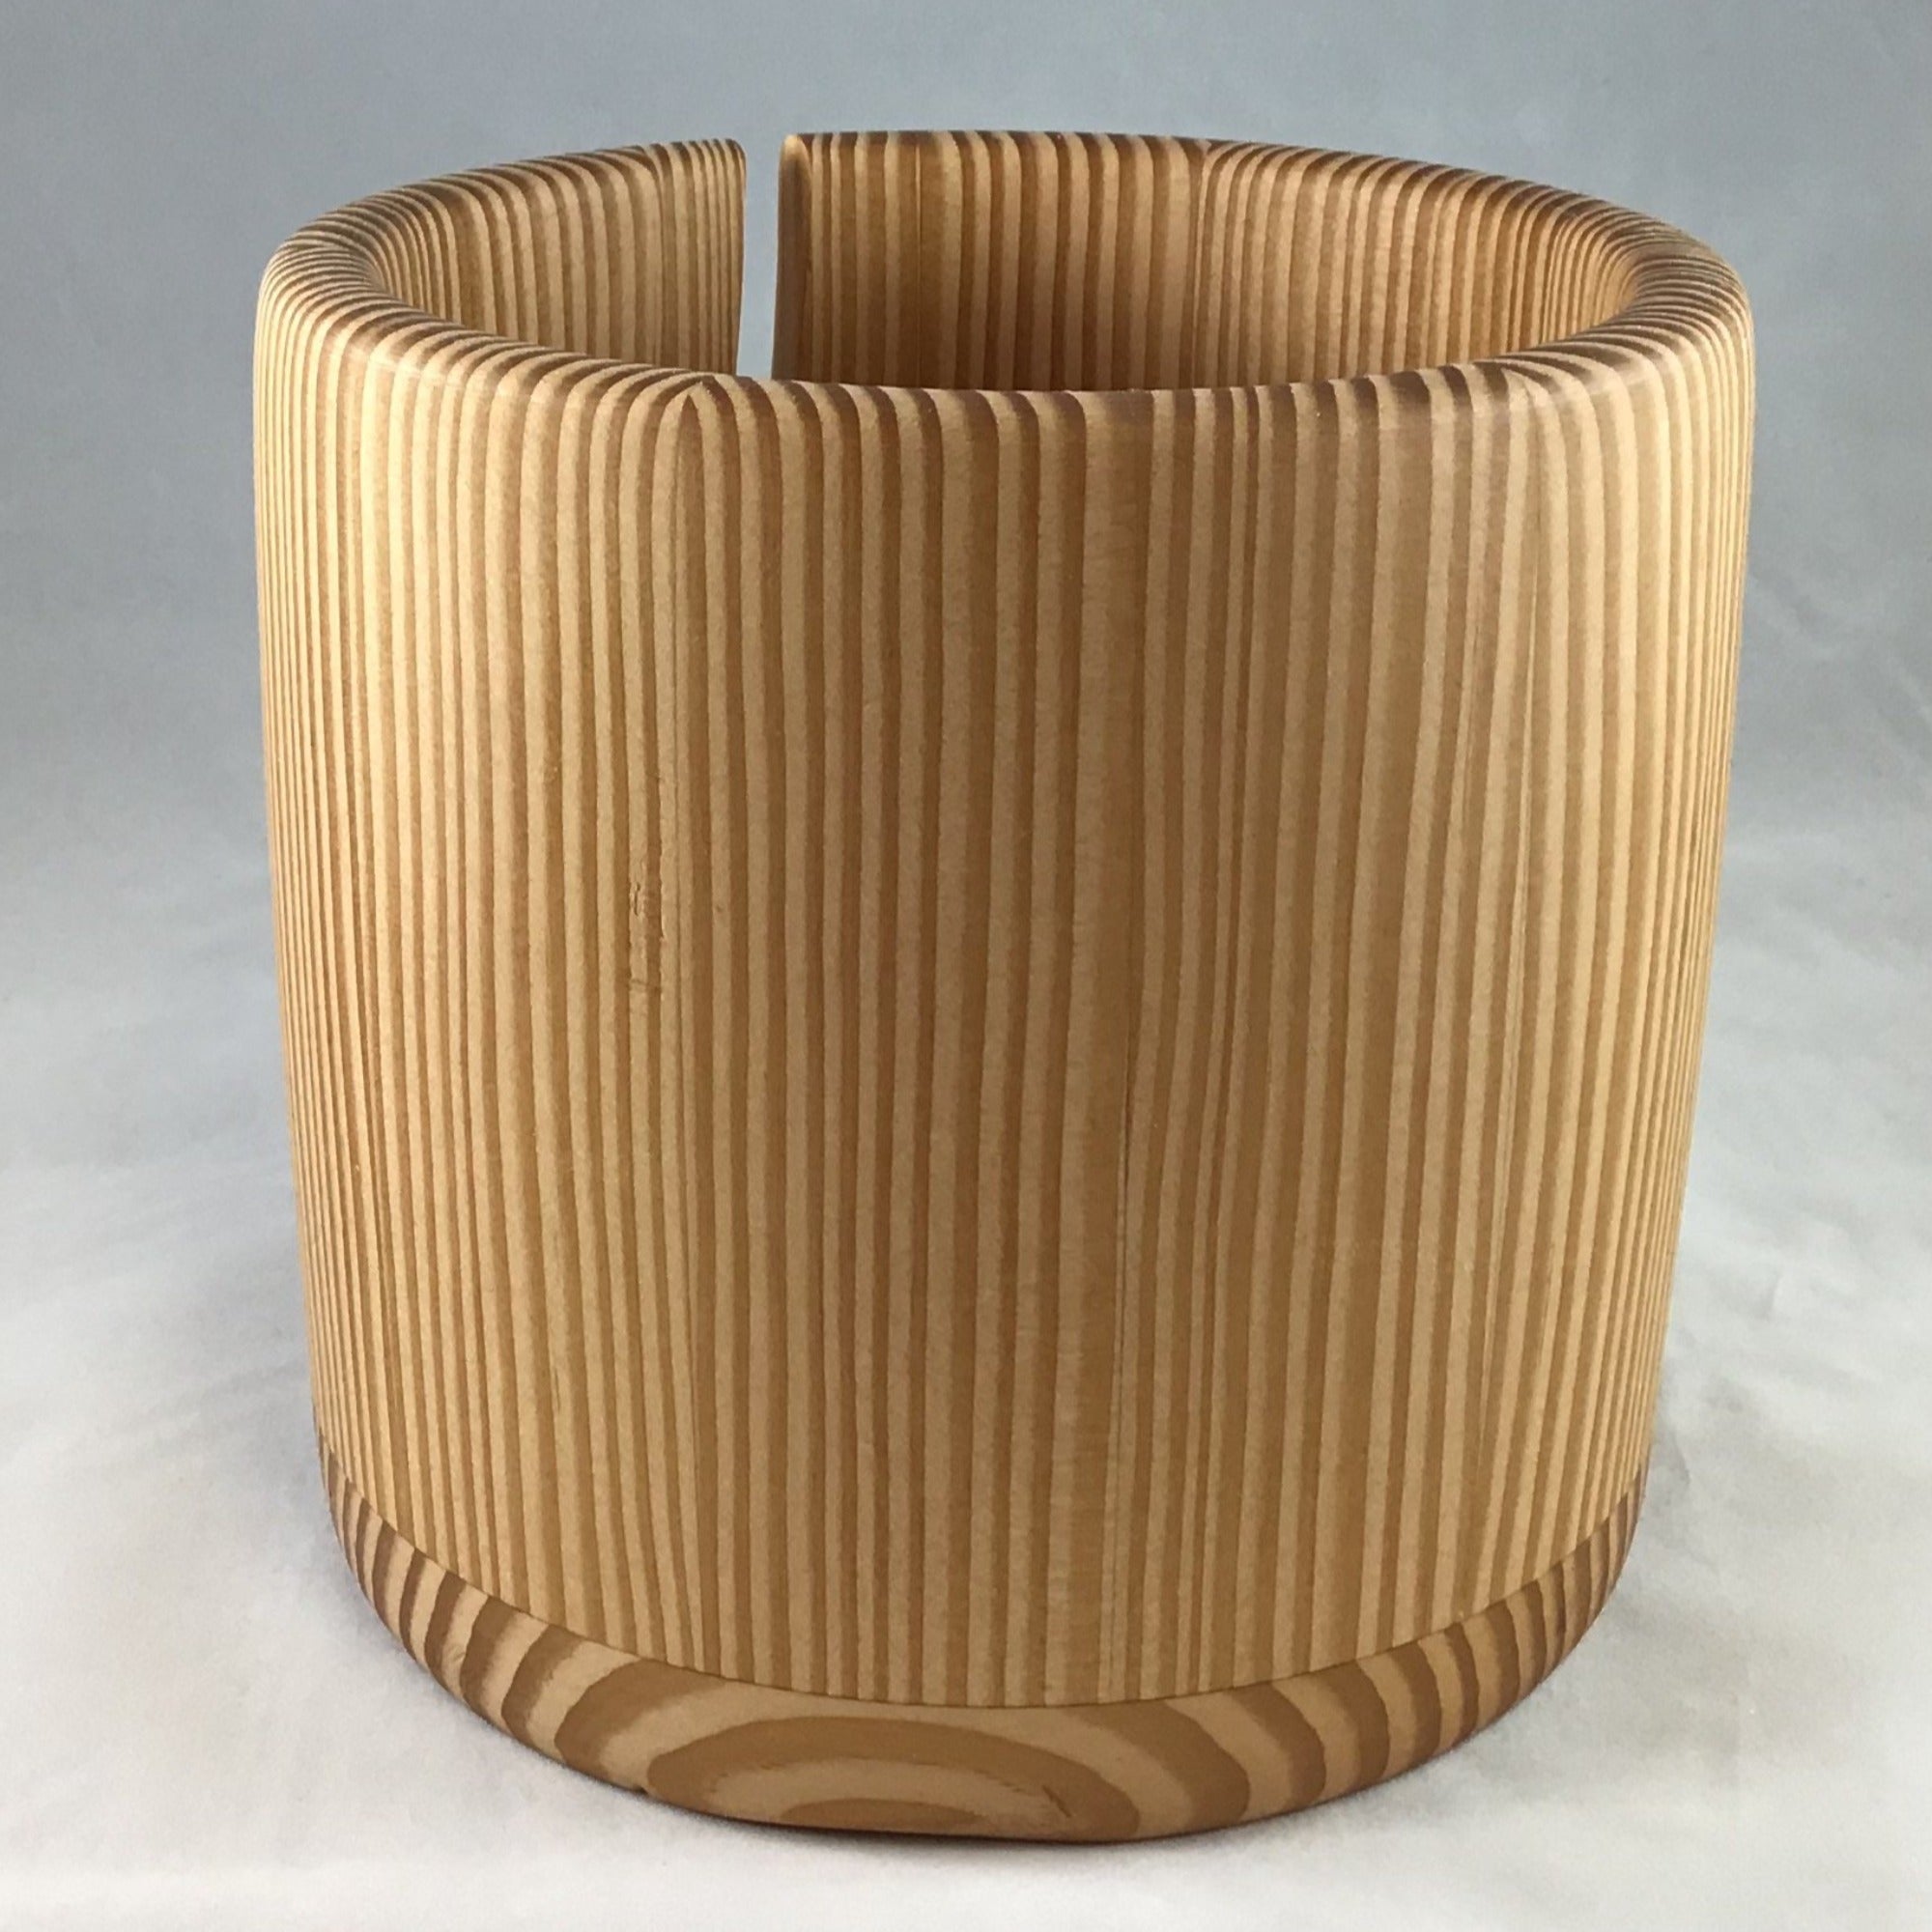 One-of-a-Kind Yarn Bowl by Jerry Ertle – Douglas Fir #59